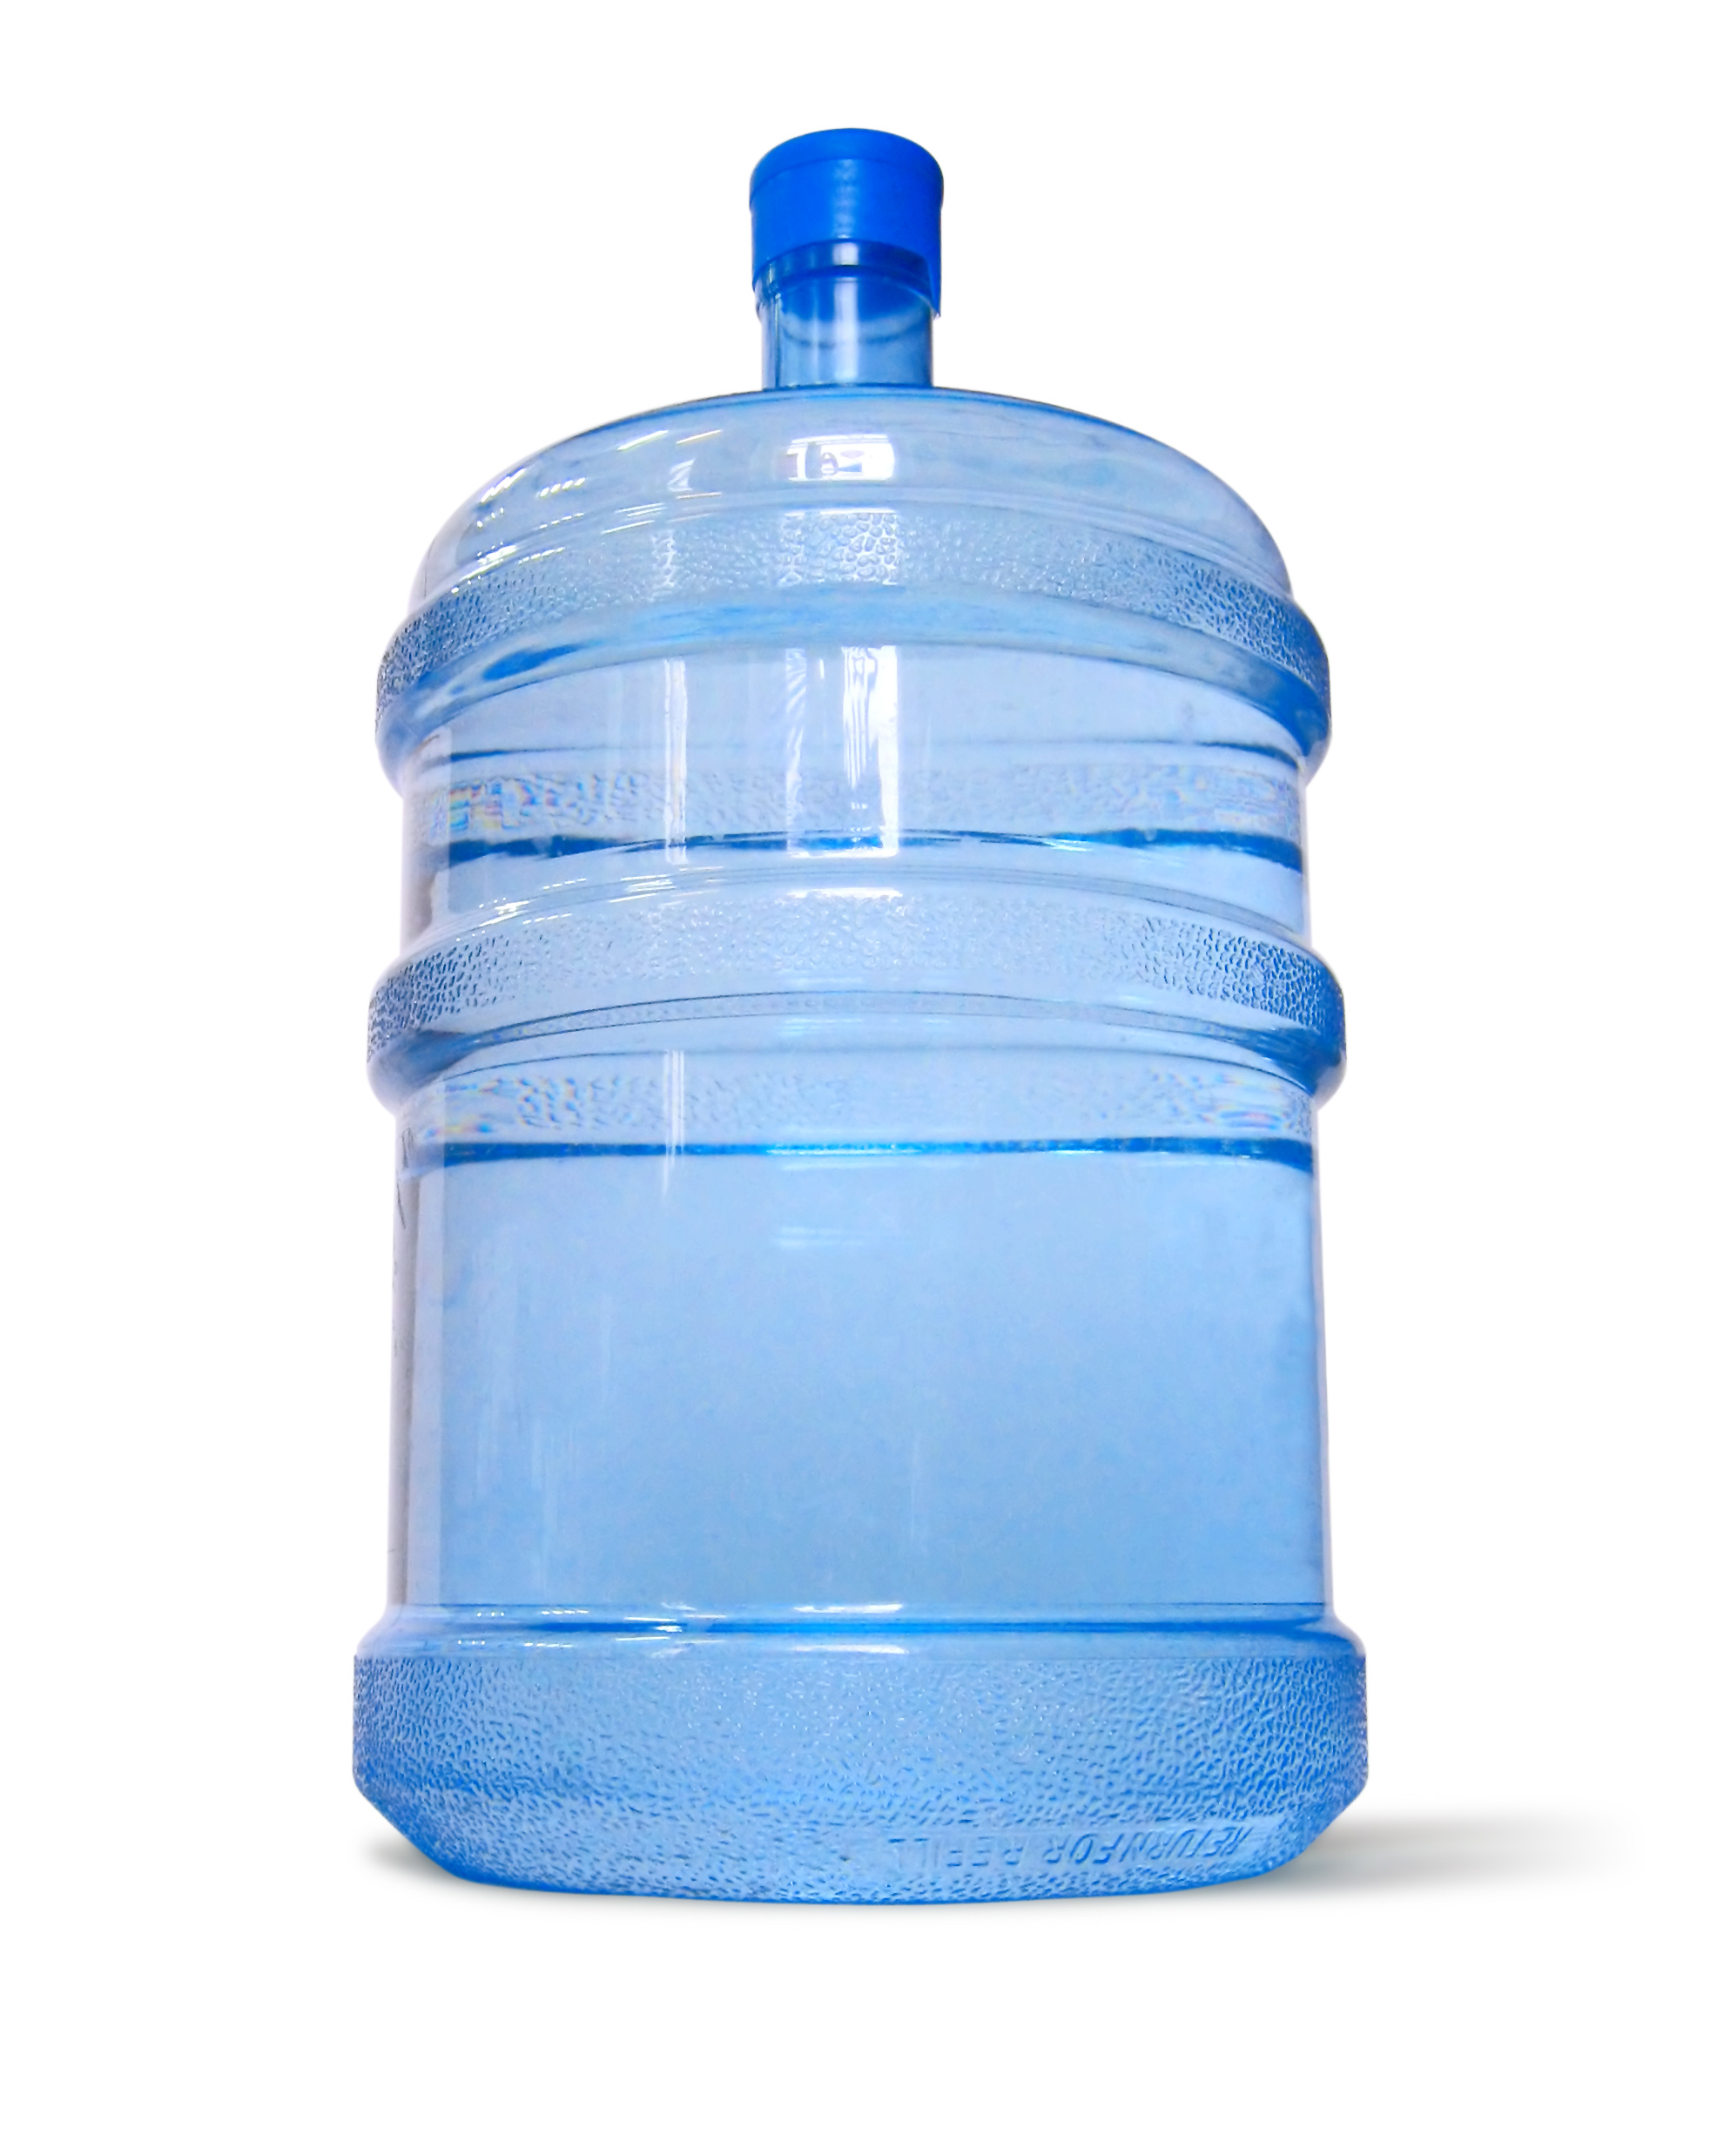 http://sanjosegreenhome.com/wp-content/uploads/2009/08/bottle-water.jpg